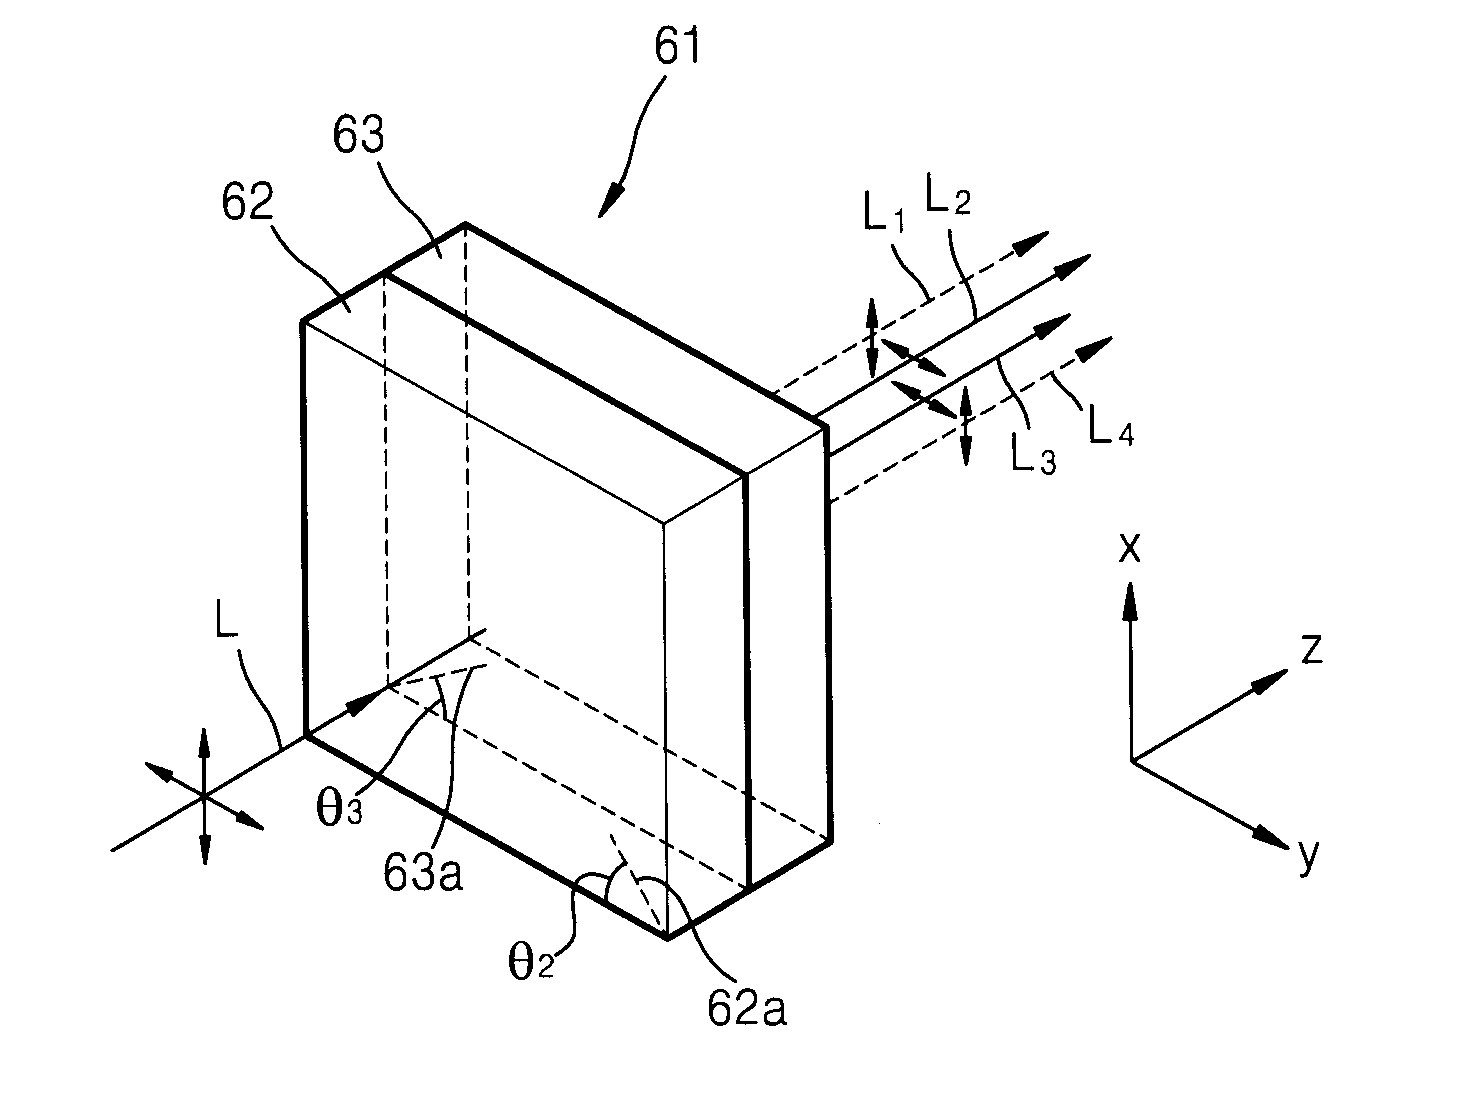 Laser display apparatus